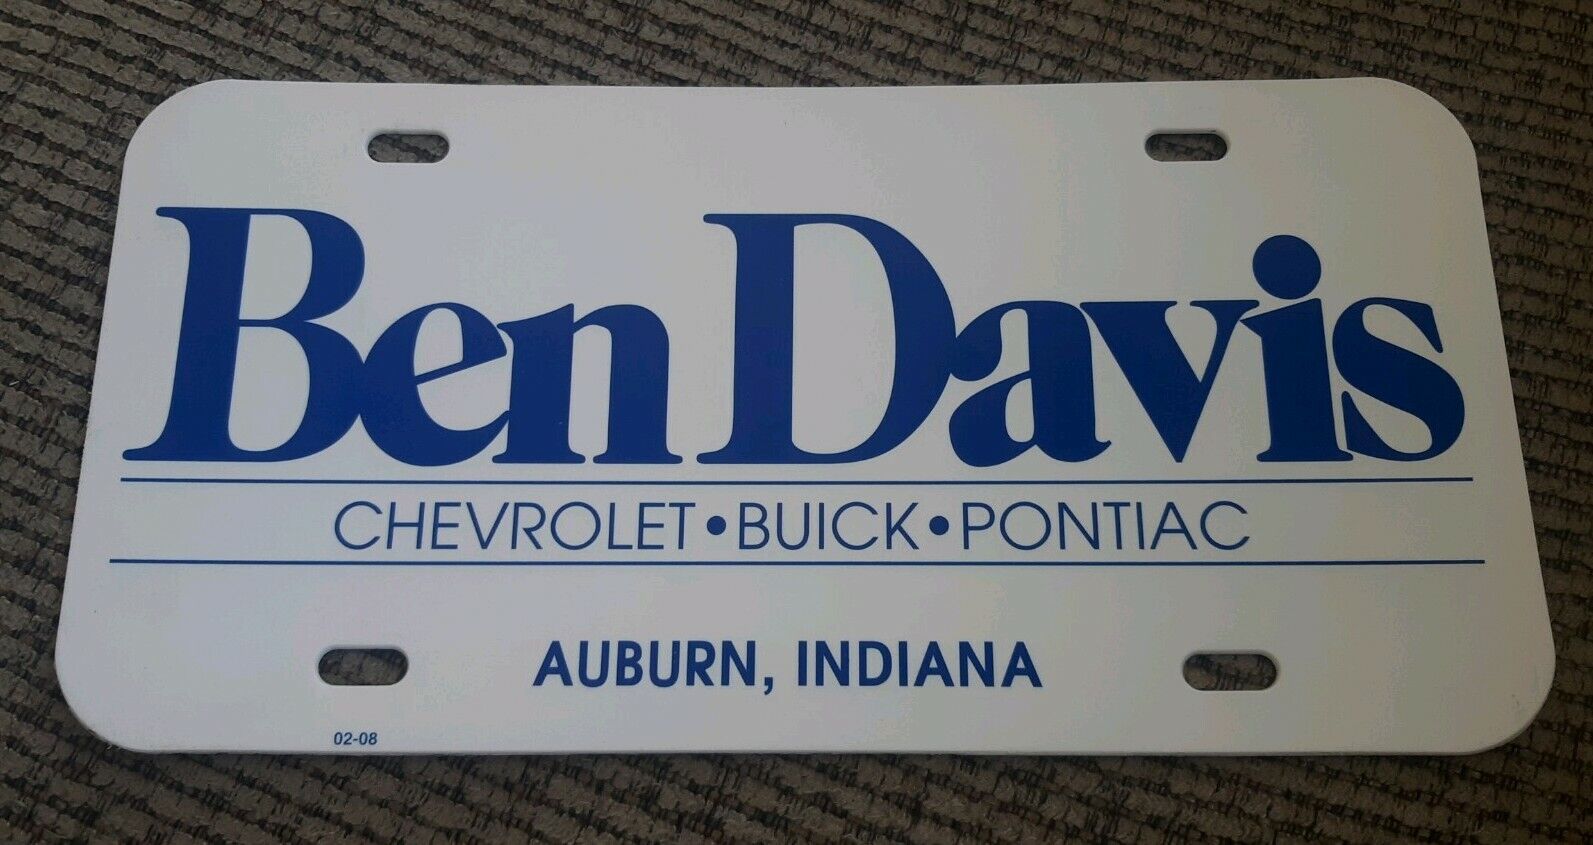 BEN DAVIS Chevrolet BUICK PONTIAC chevy car Dealer License plate AUBURN INDIANA 